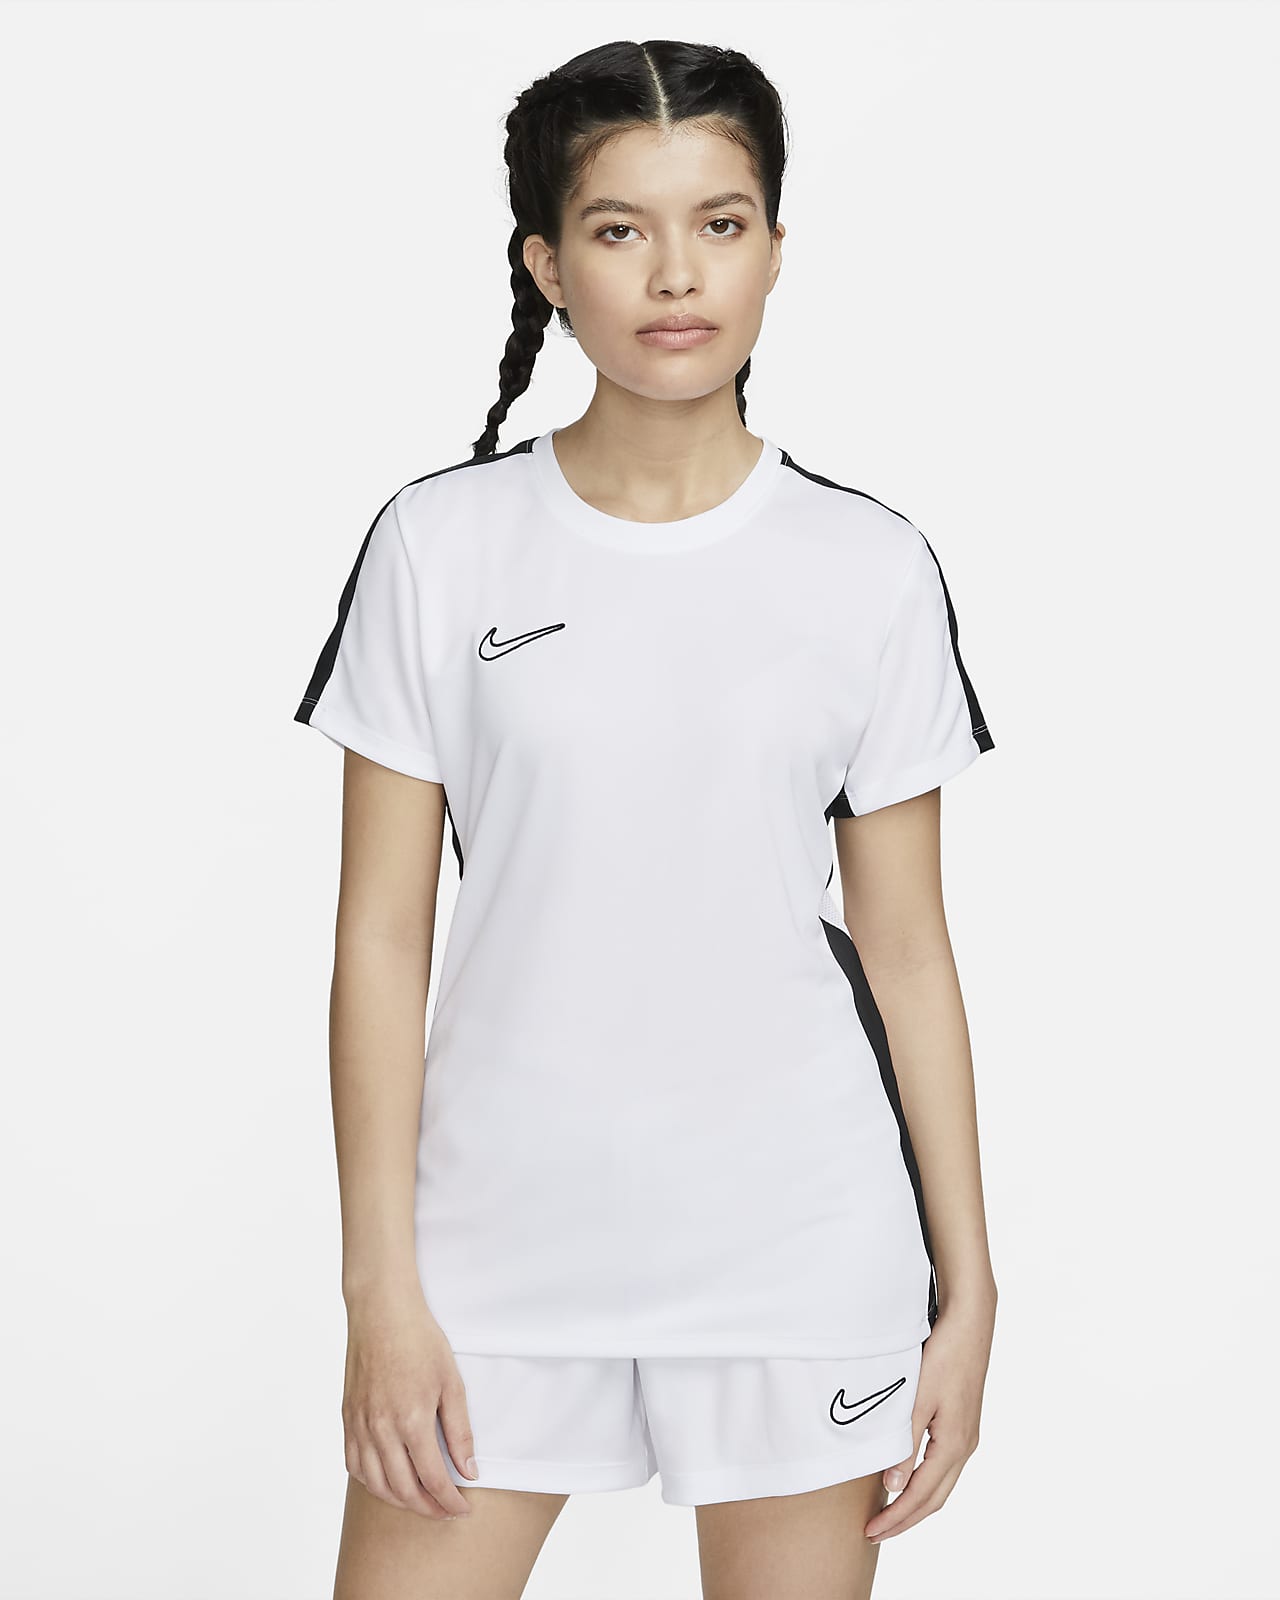 Nike Dri-FIT Academy Women's Short-Sleeve Football Top